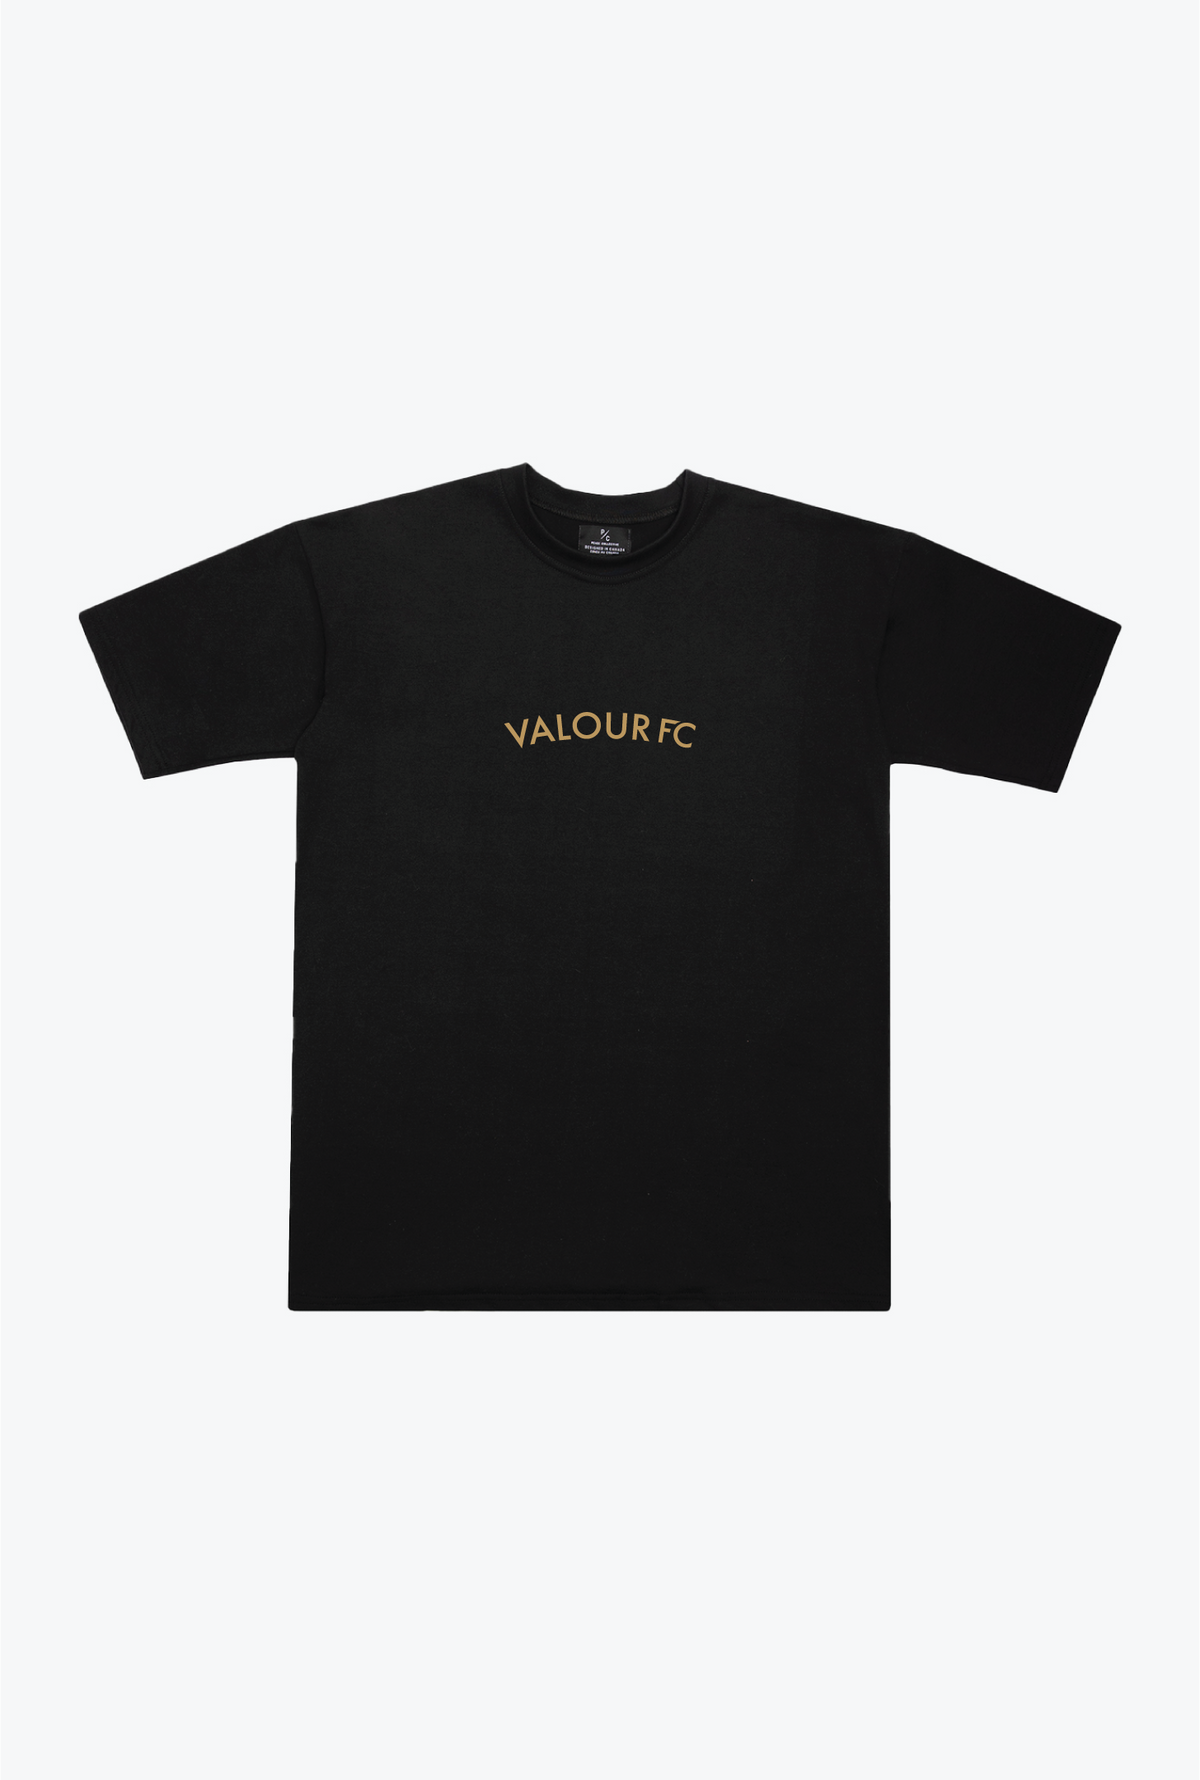 Valour FC Heavyweight T-Shirt - Black